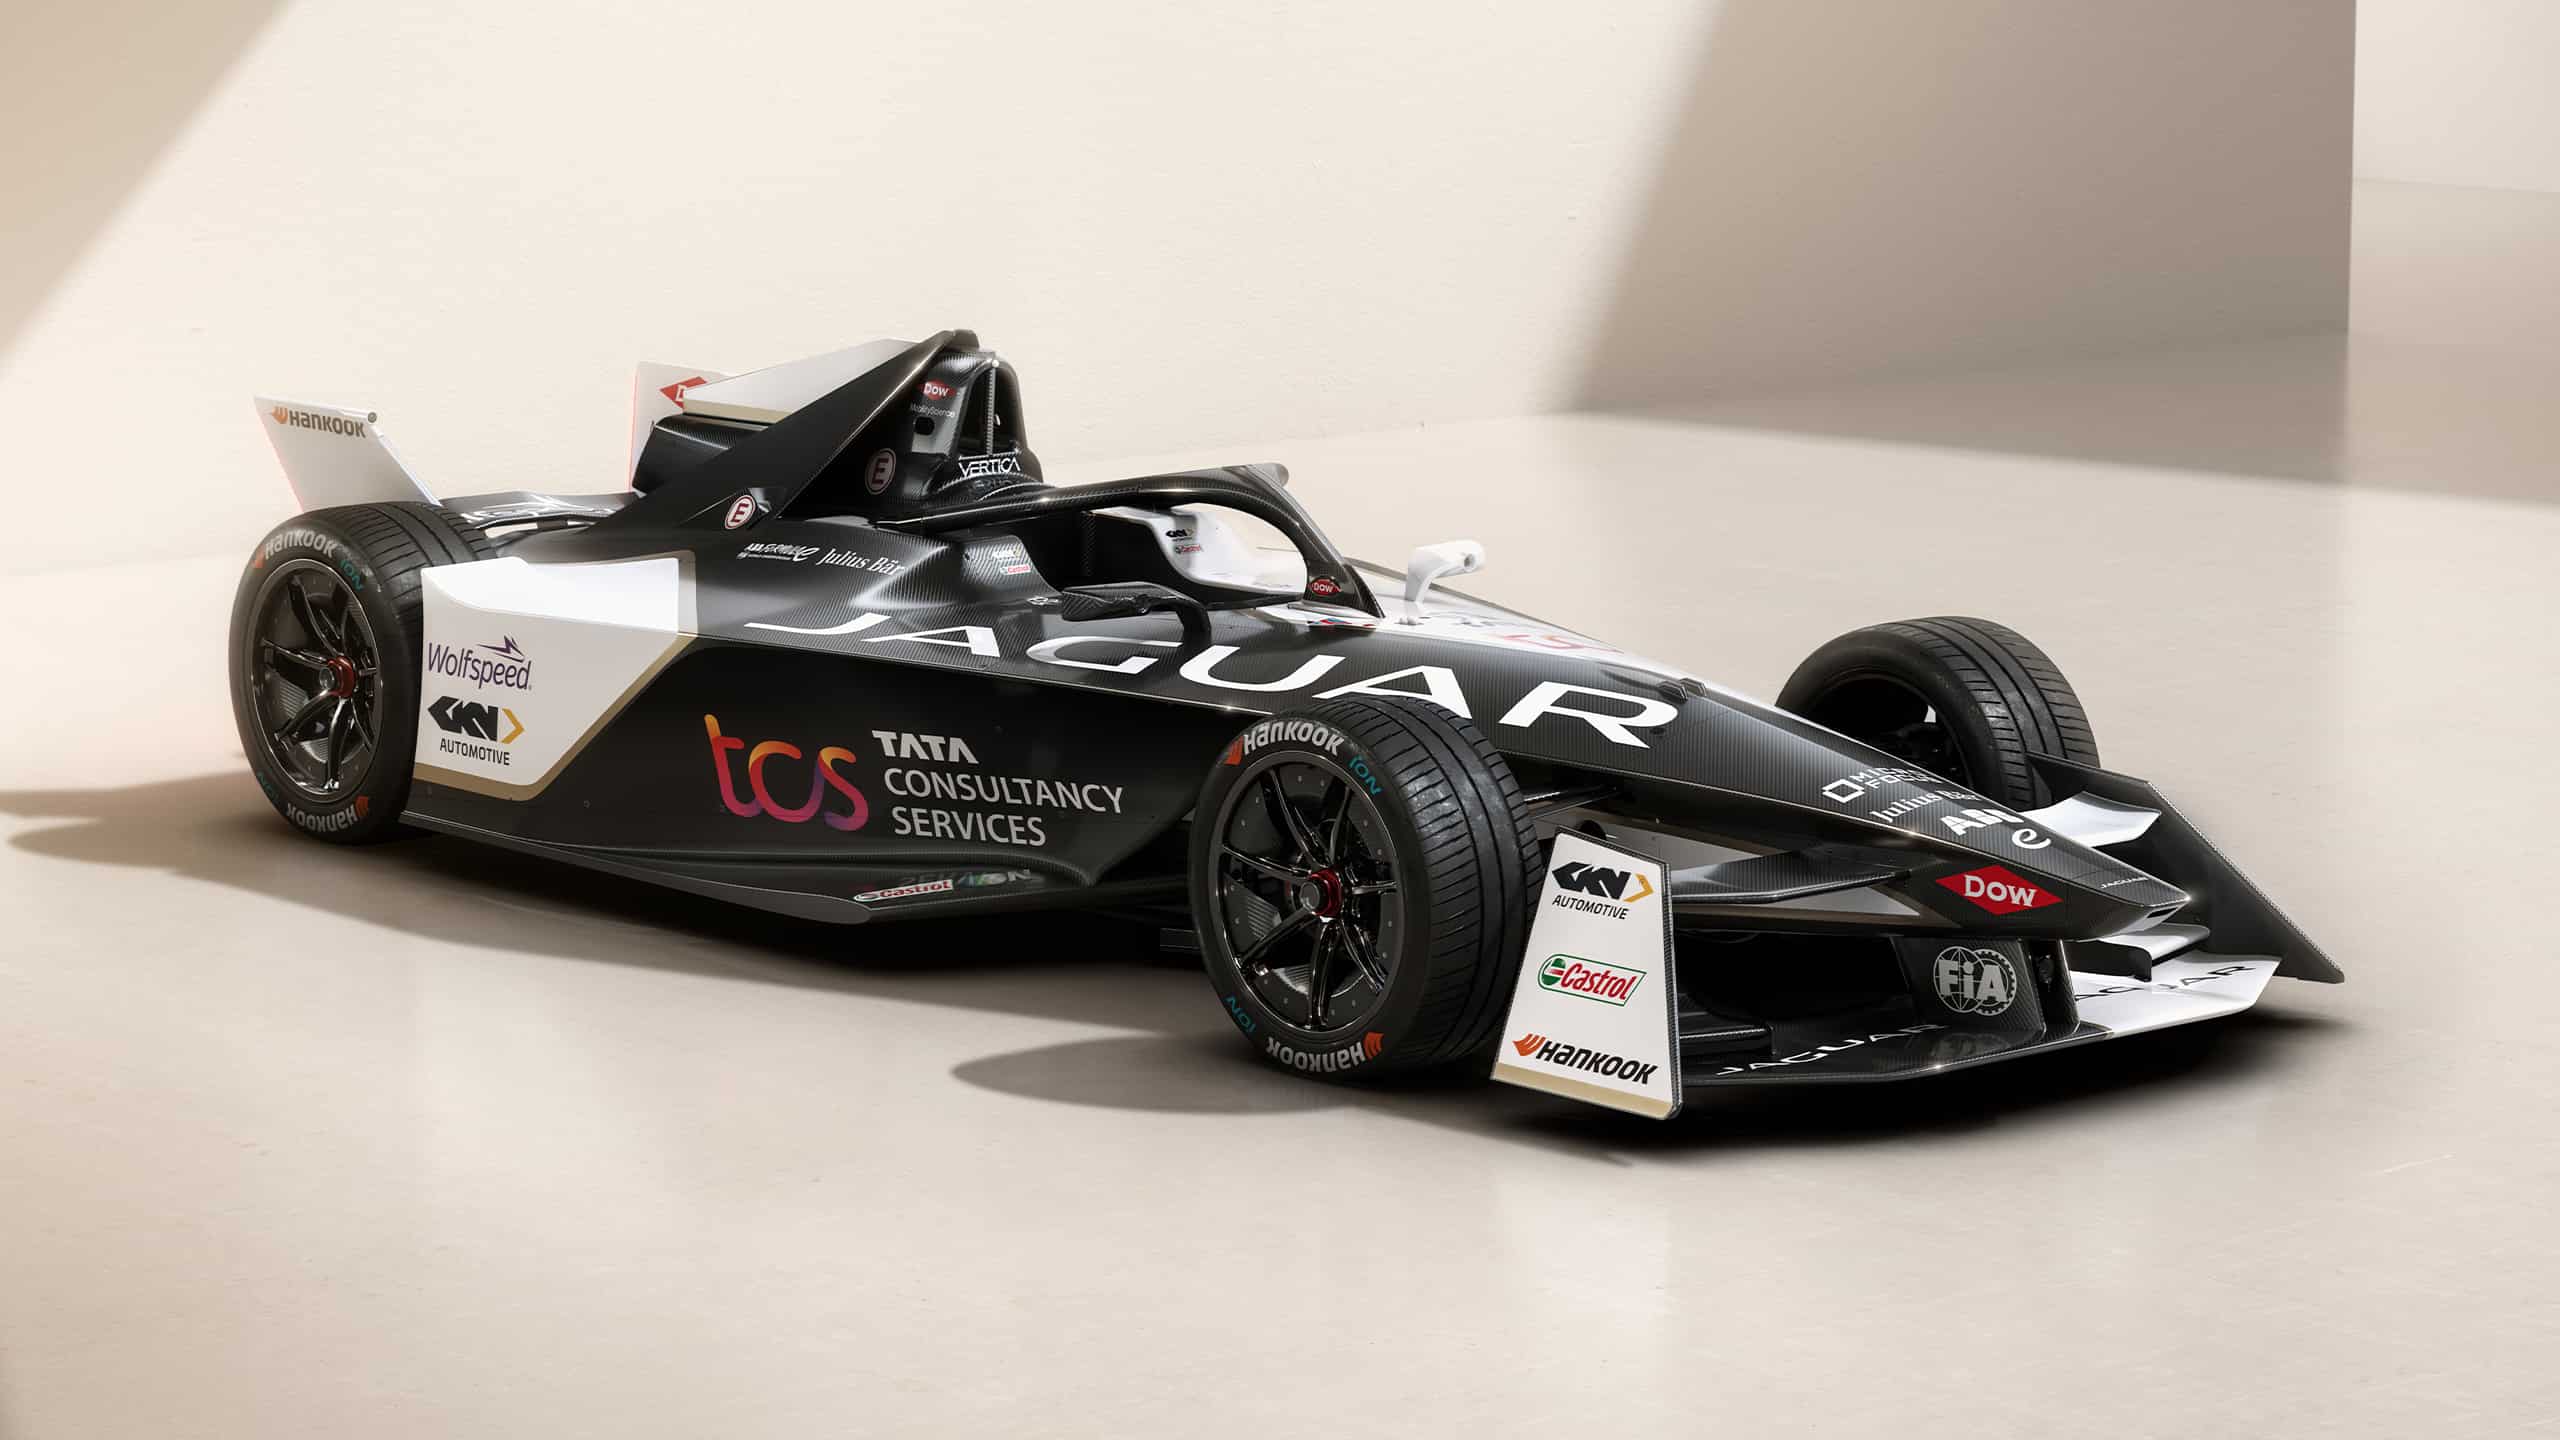 The new Jaguar Formula E race car